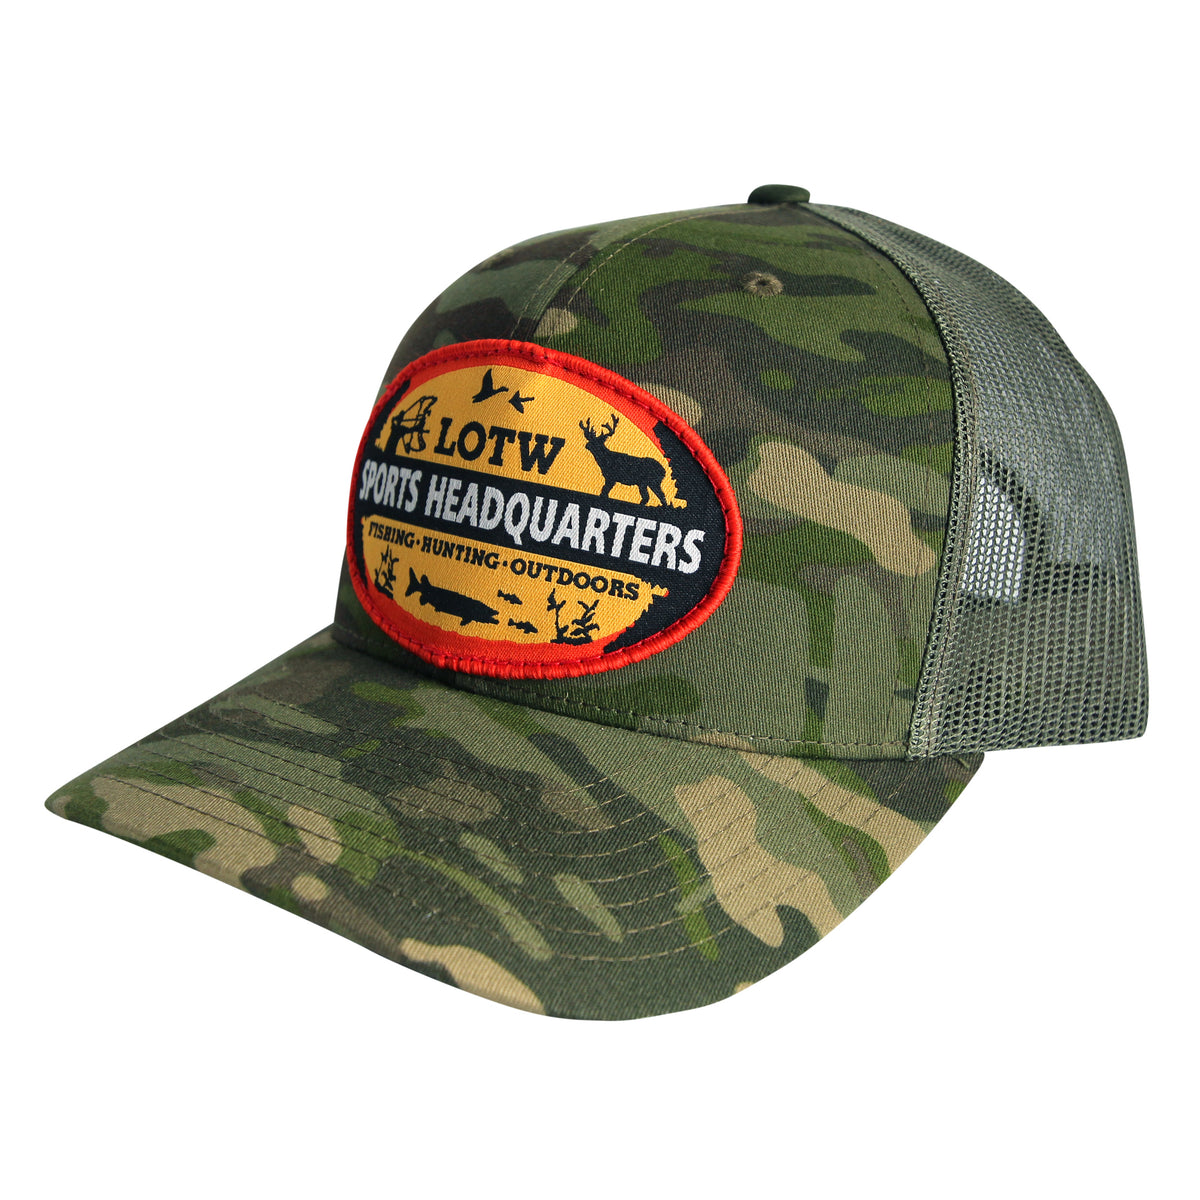 LOTW Sports Headquarters Classic Multicam Snapback Trucker Hats - Multicam Tropic